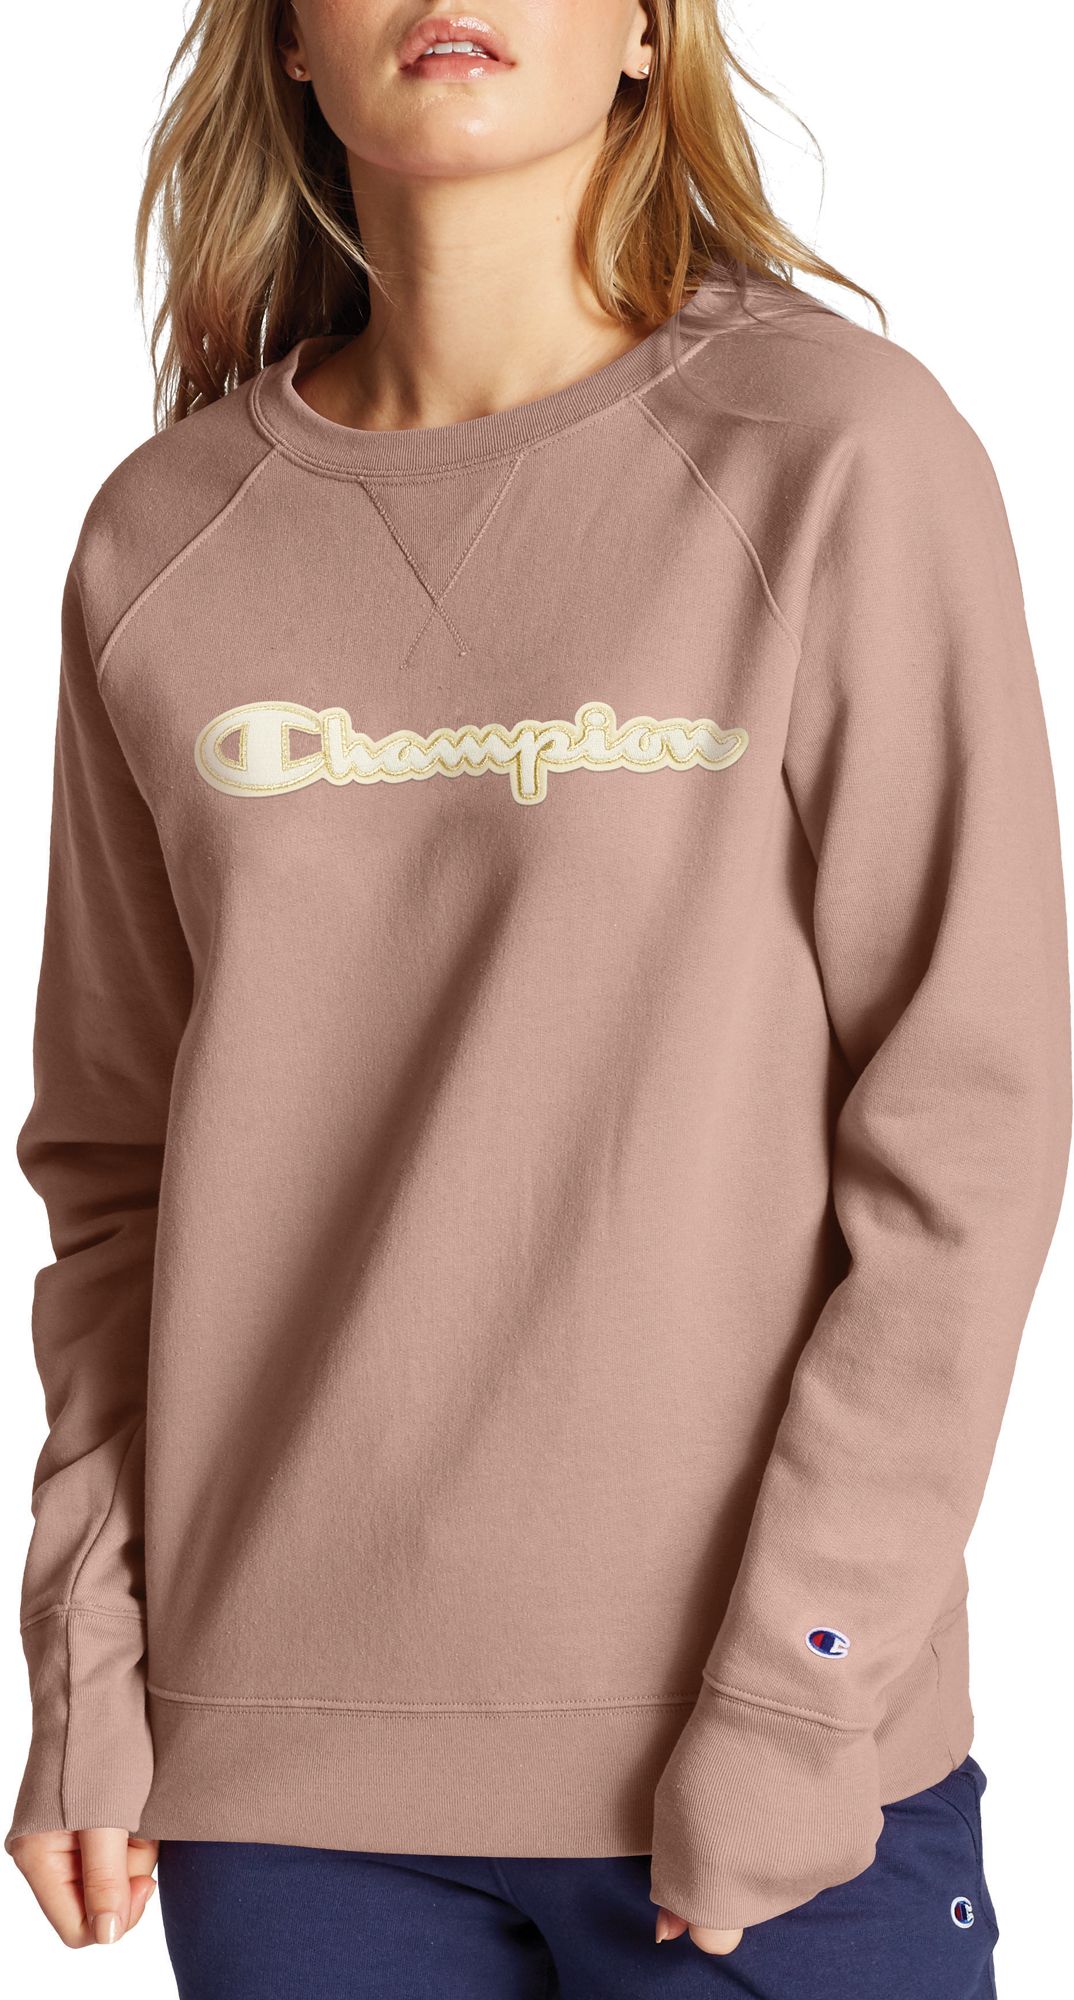 champion sweatshirt dicks